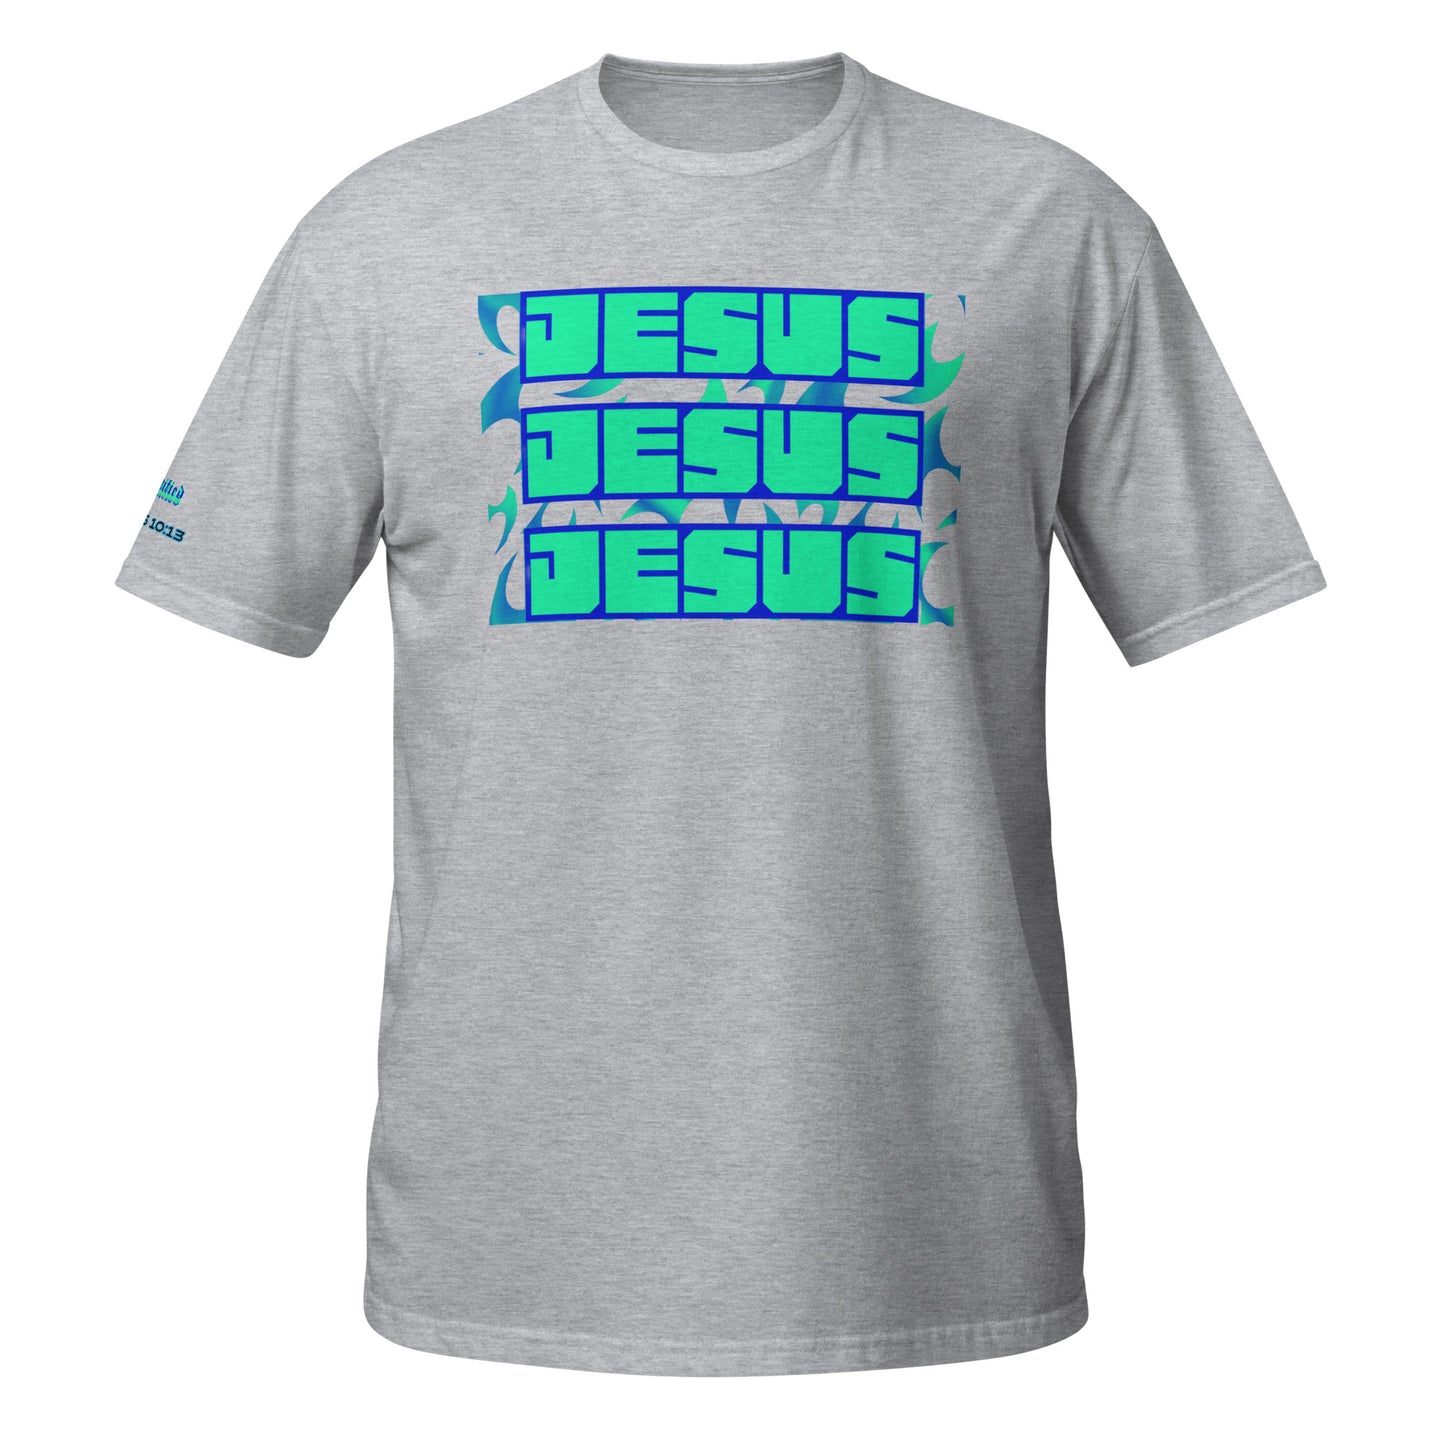 JESUS, JESUS, JESUS- Short-Sleeve Unisex T-Shirt